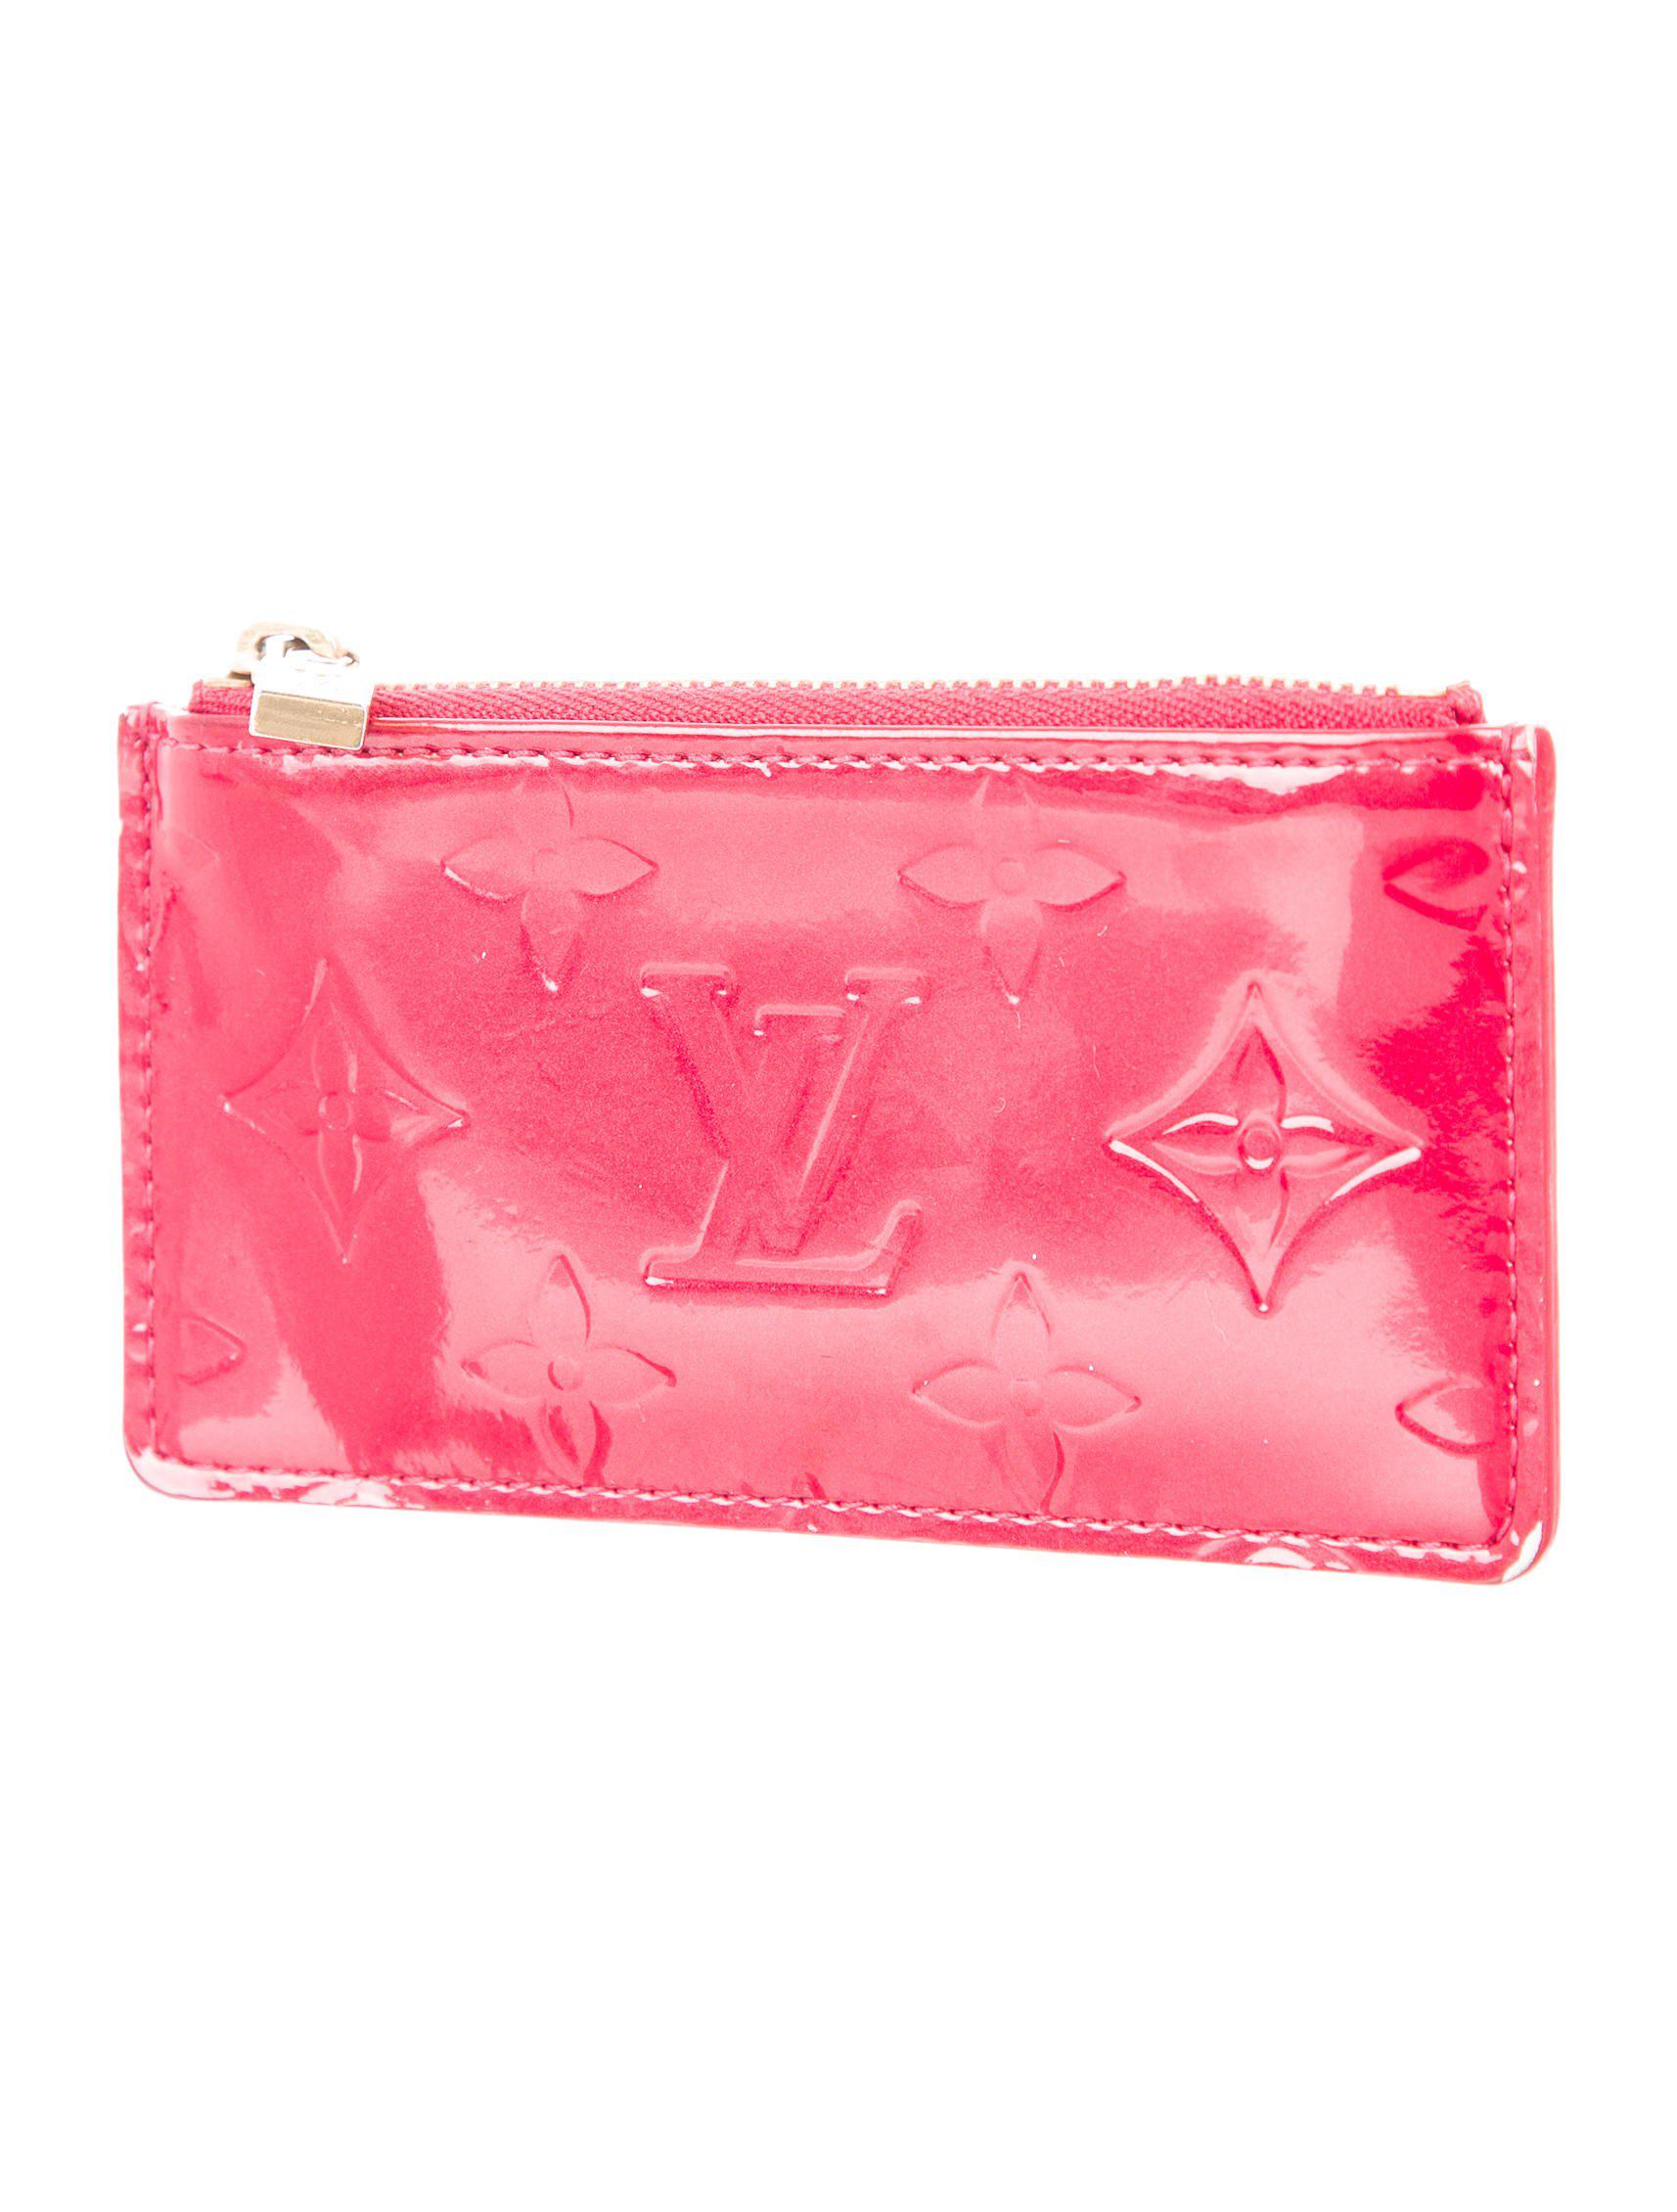 Lyst - Louis Vuitton Monogram Vernis Coin Pouch in Pink